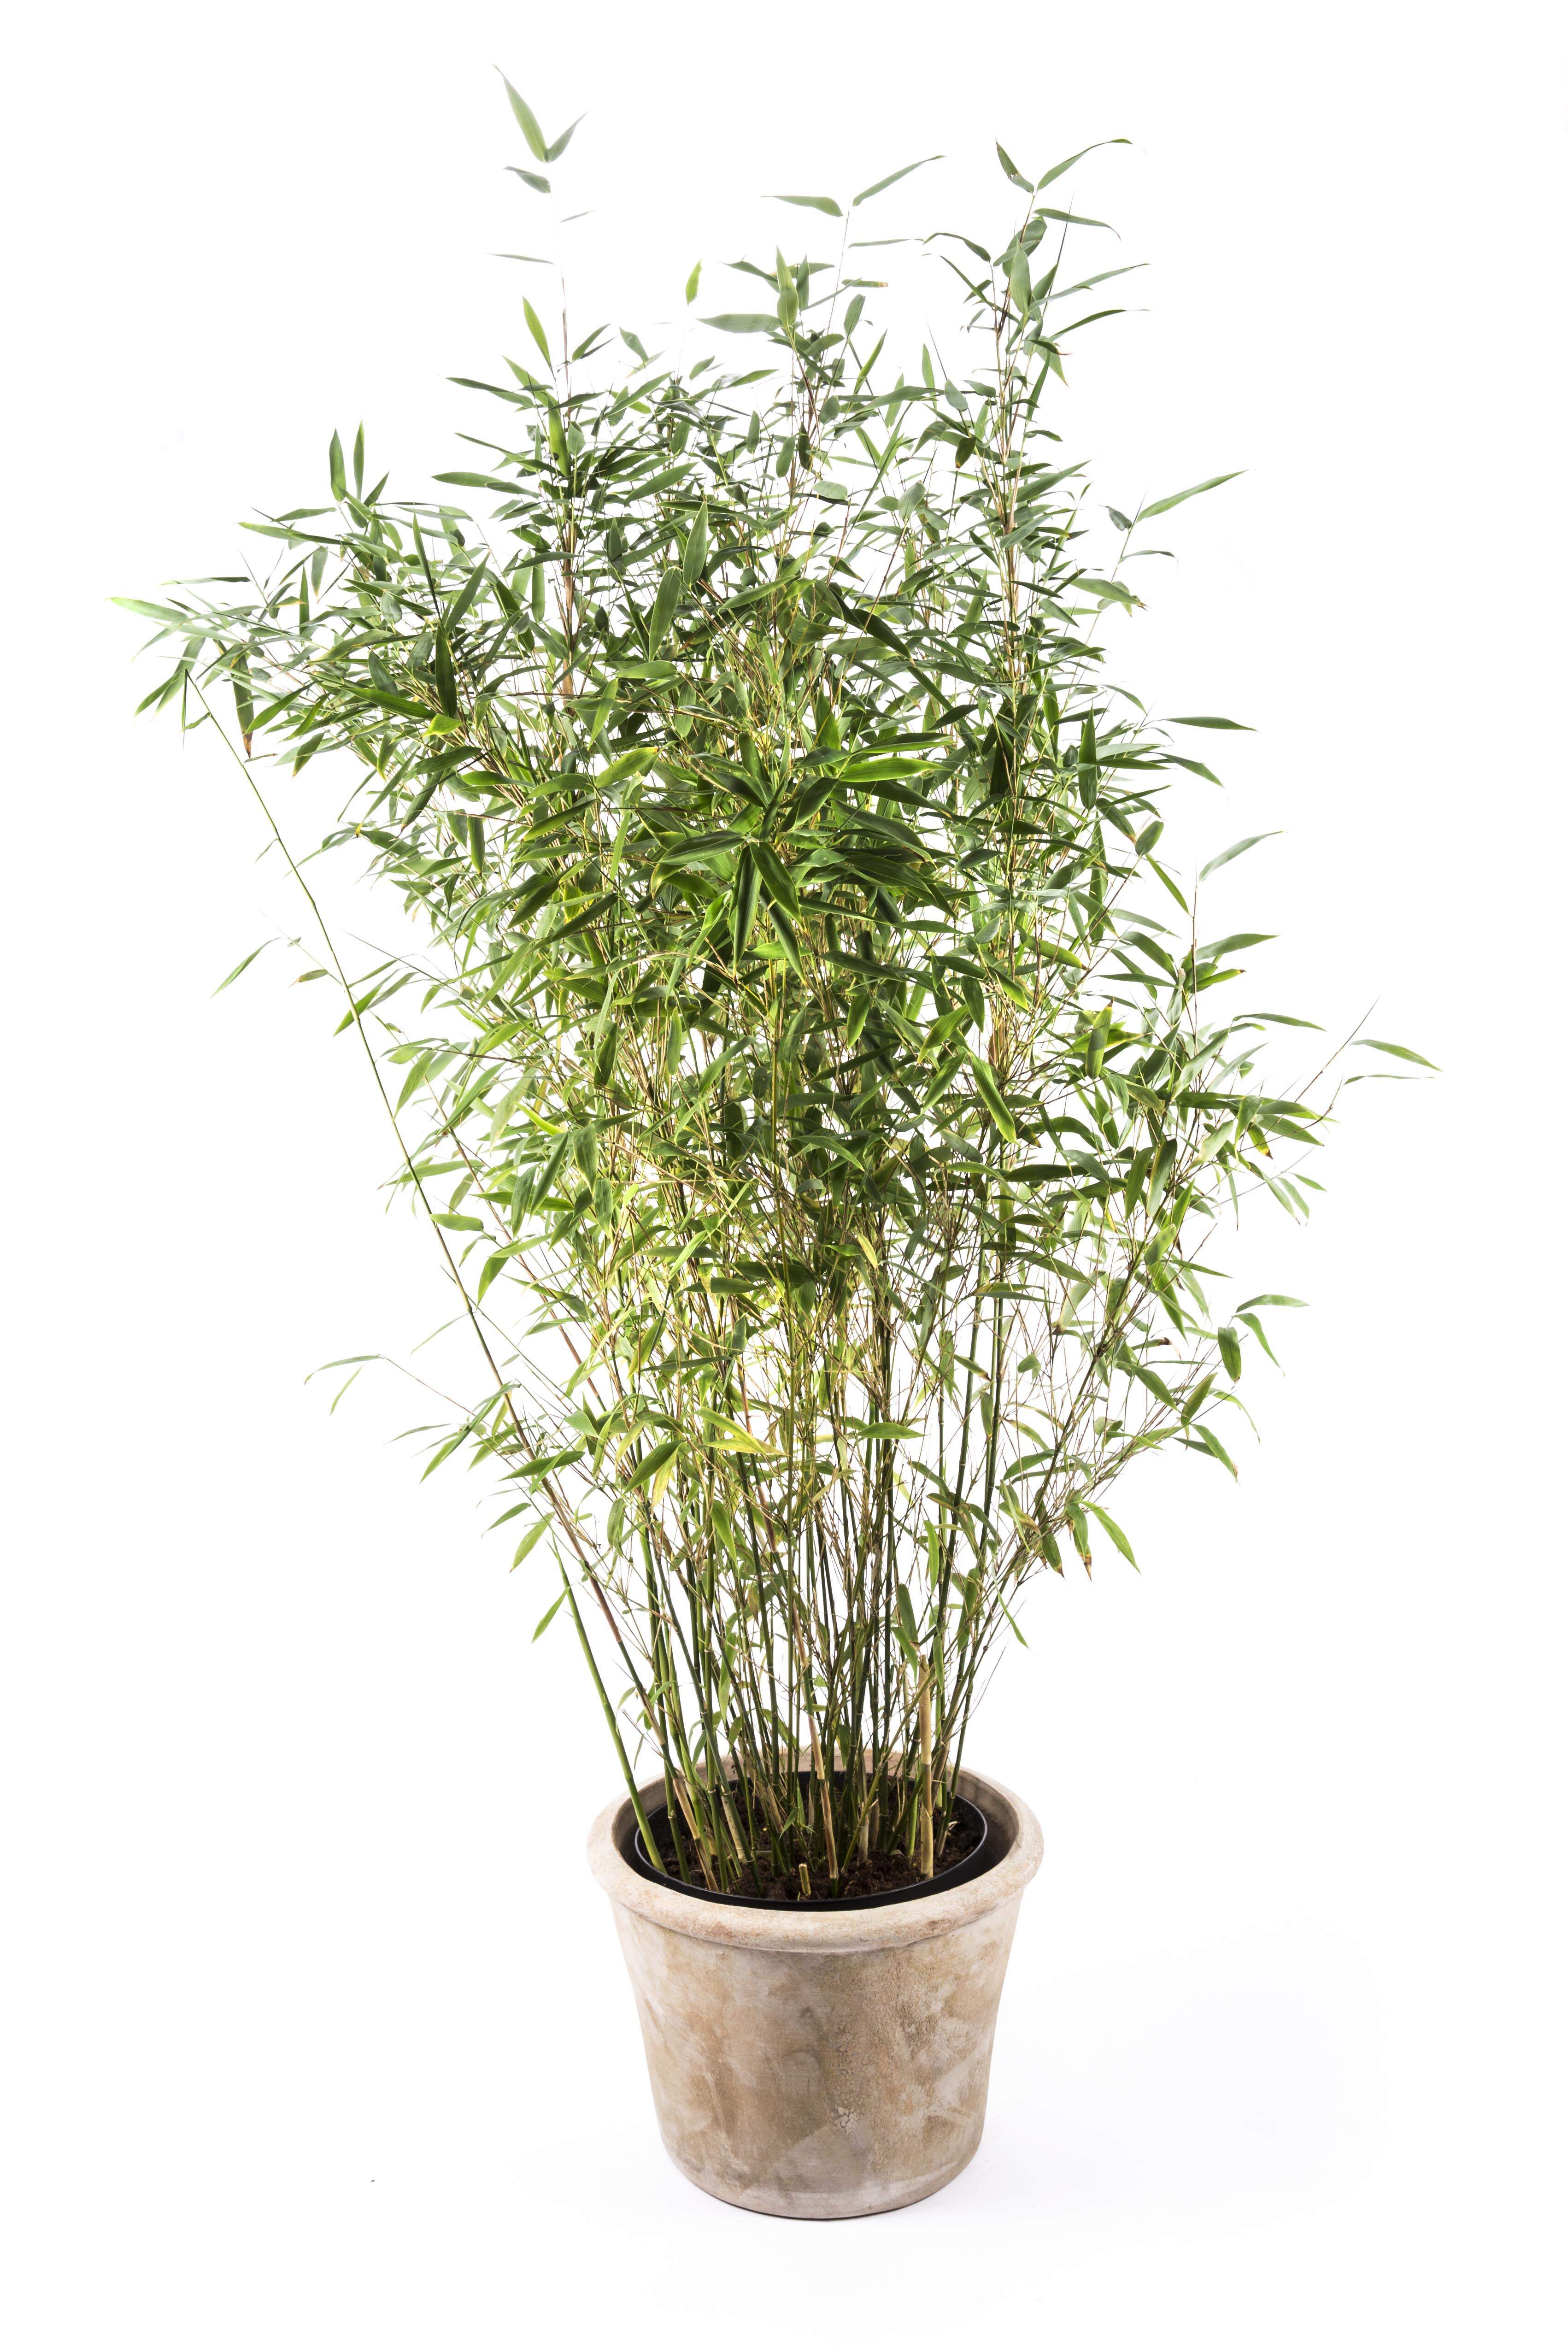 Bambus China Rohrgras Fargesia murielae Simba 40-60 cm hoch im 3 Liter Pflanzcontainer